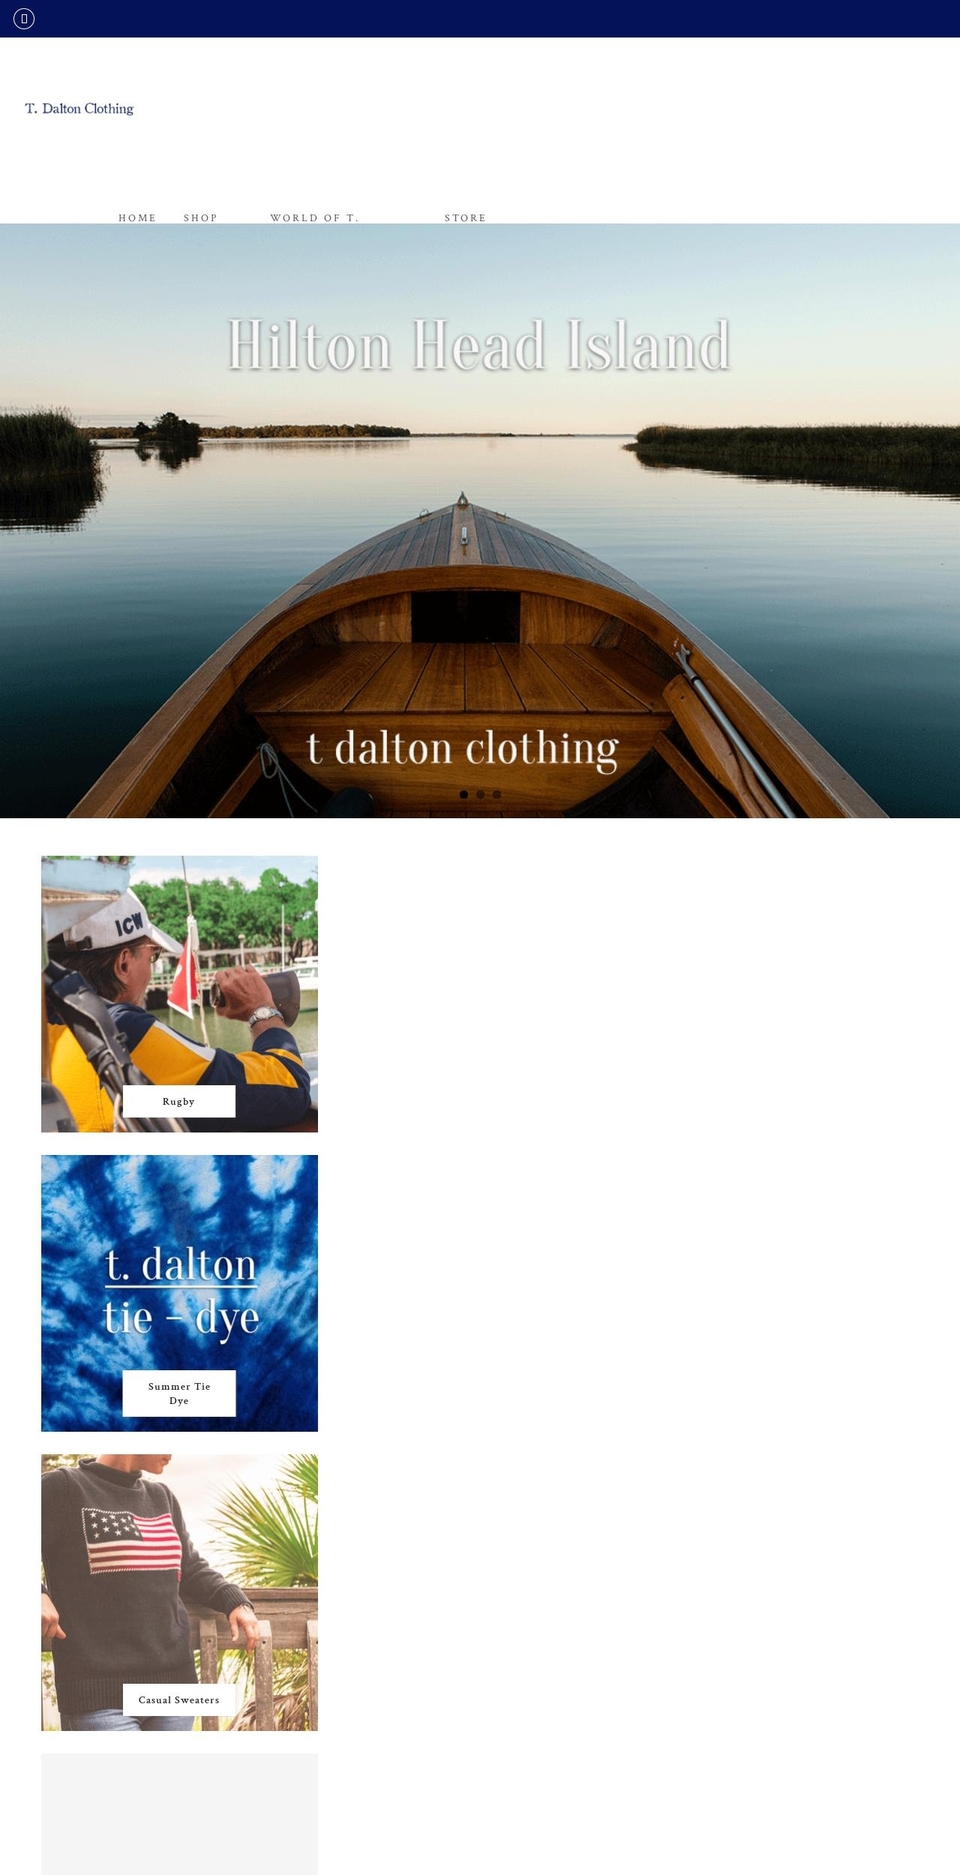 tdaltonclothing.com shopify website screenshot